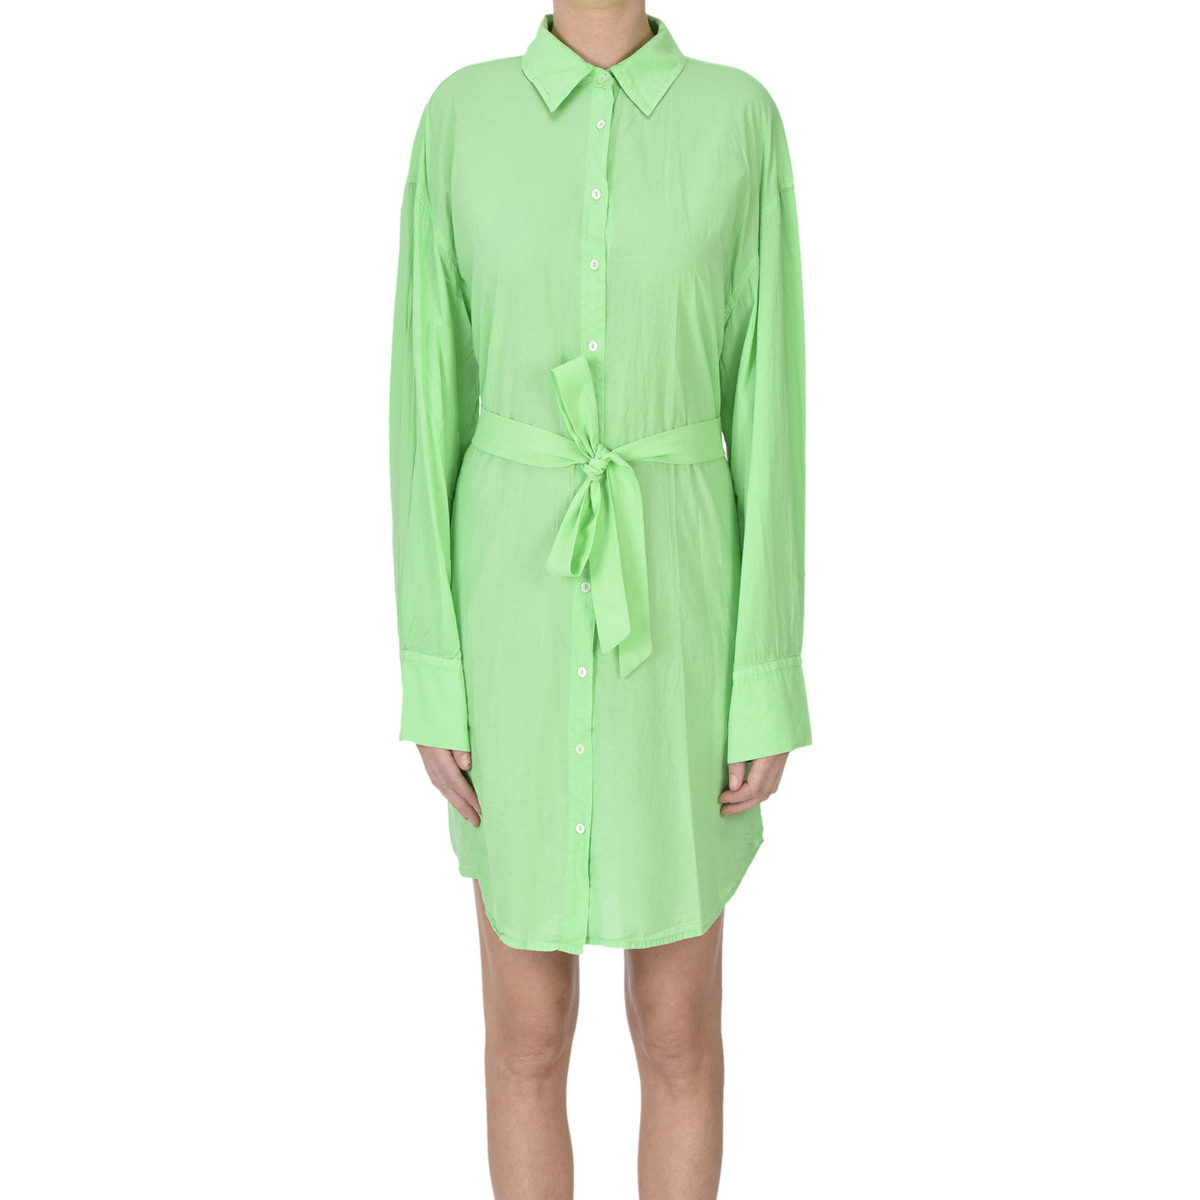 textil Mujer Vestidos Velvet VS000003035AE Verde